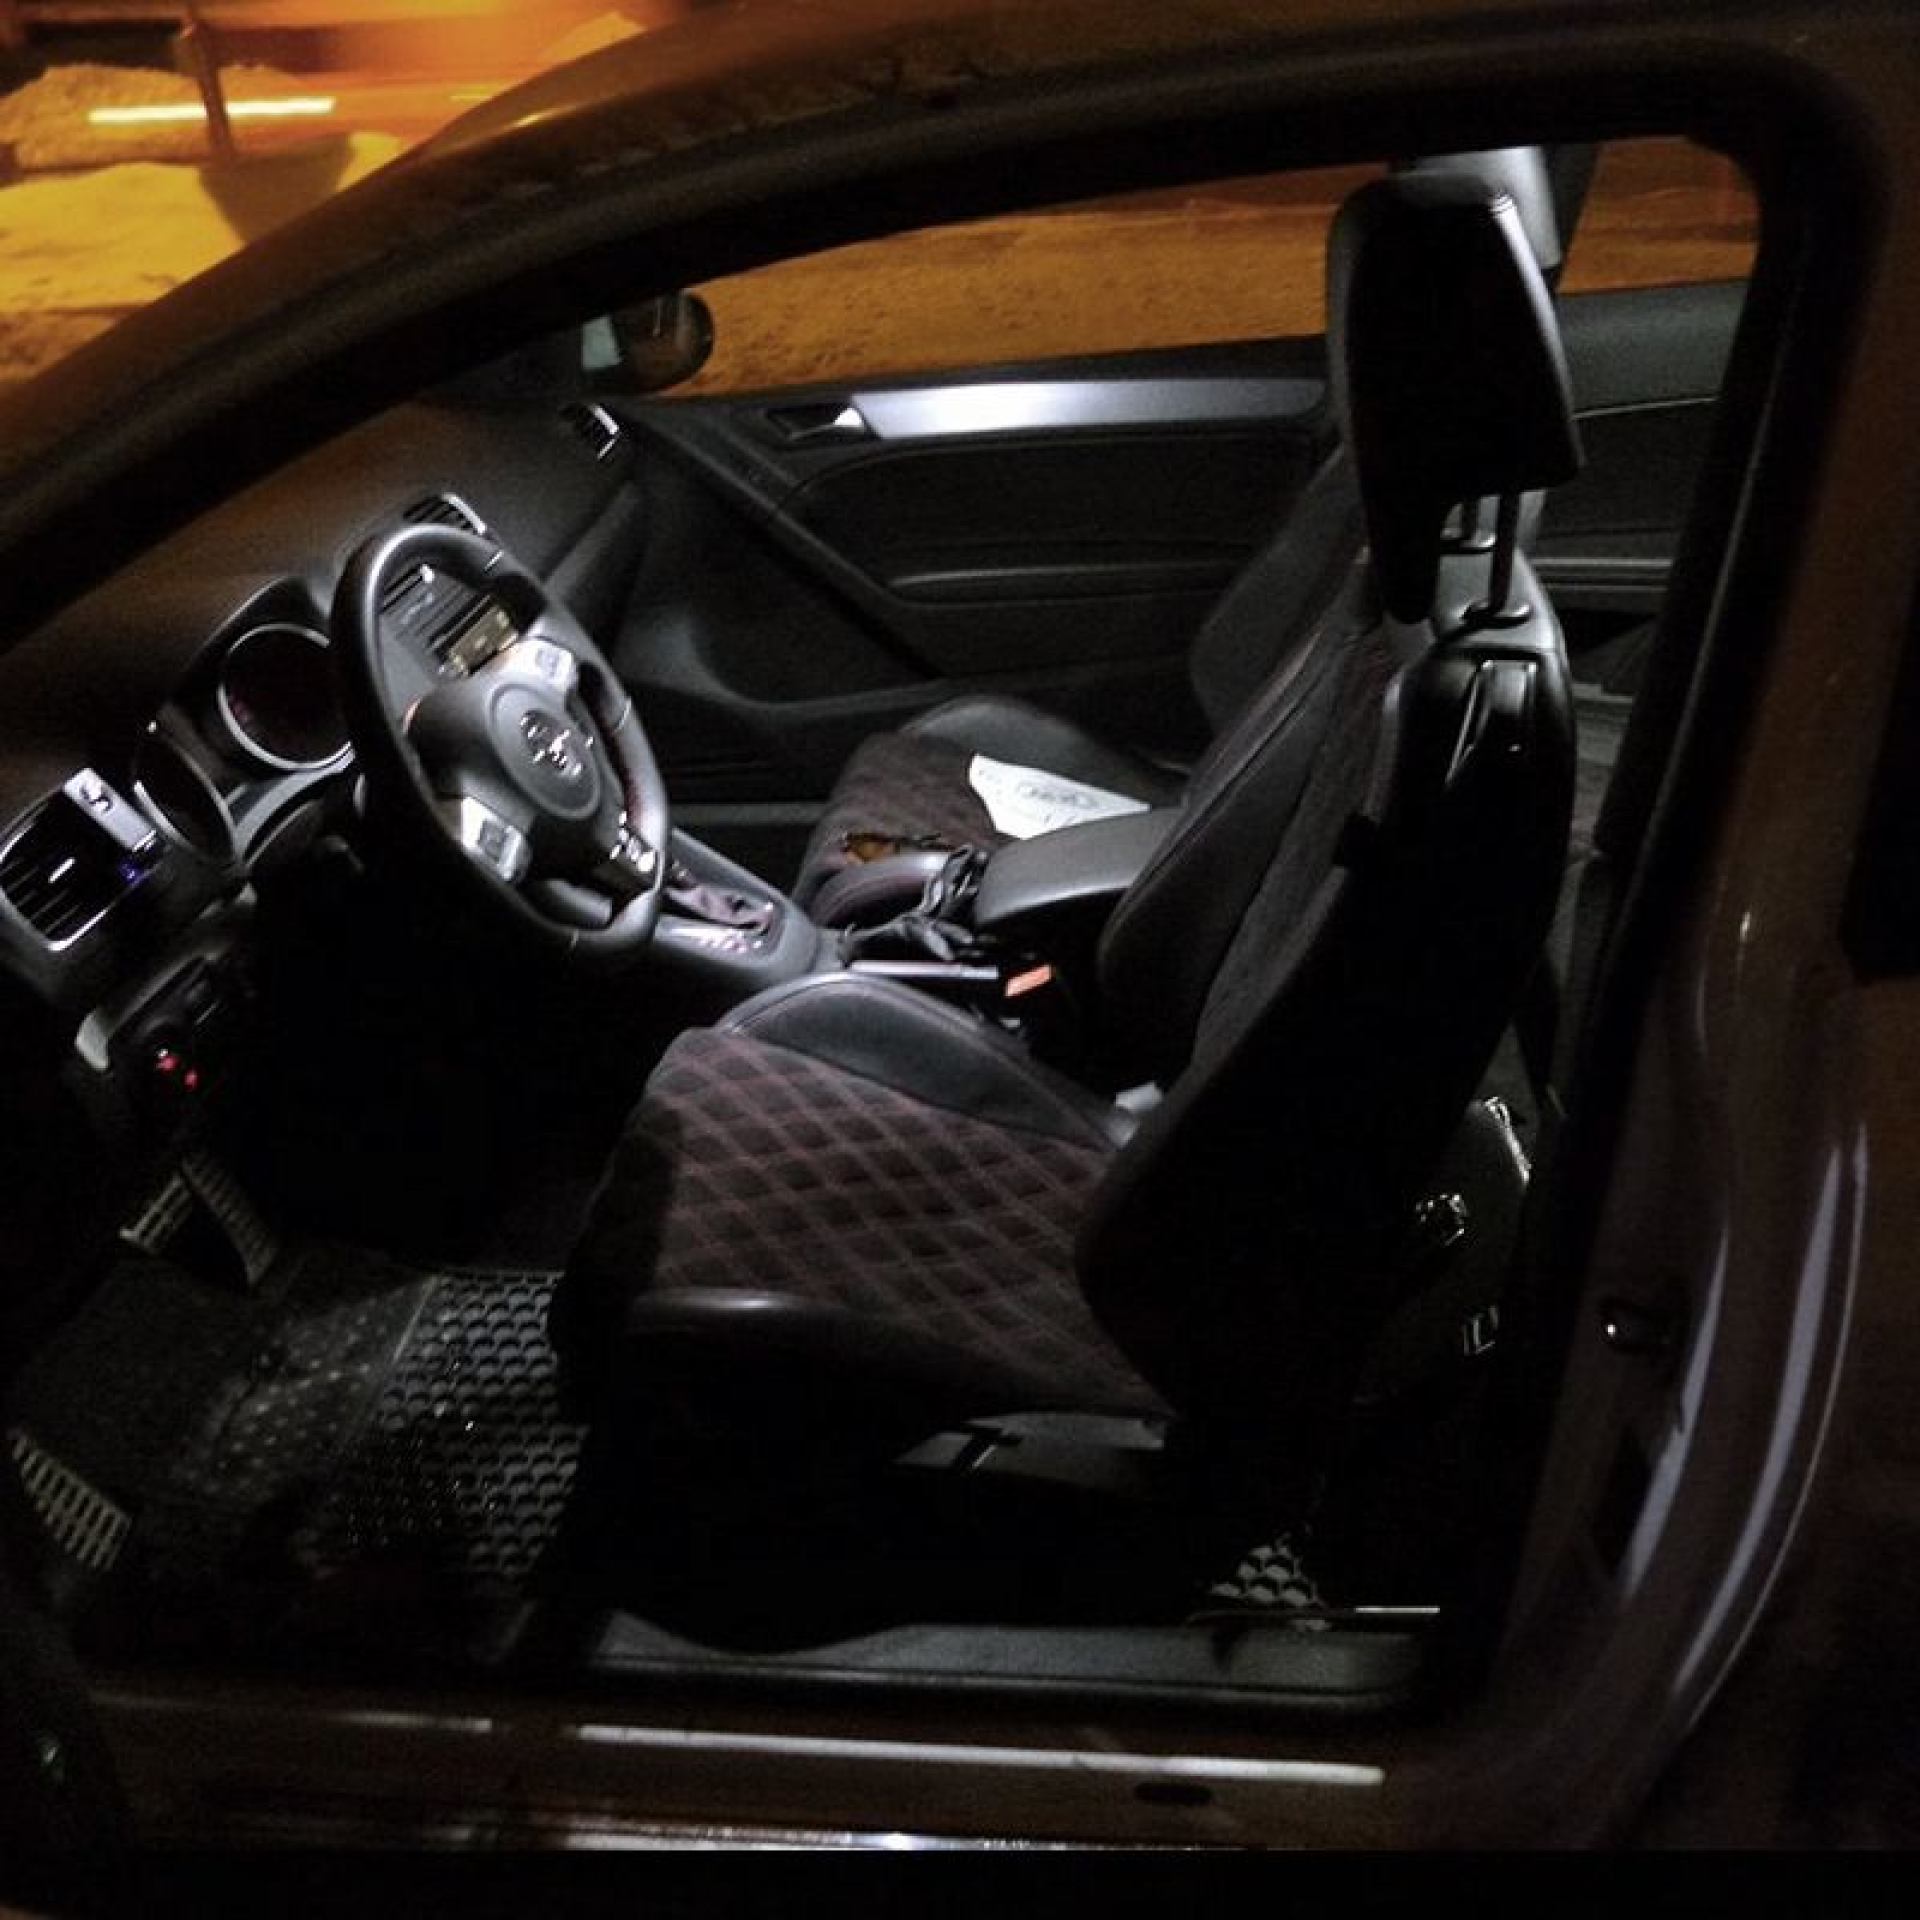 Cloud put off kapok VW Golf 5 Lumini LED interior - LuxLED